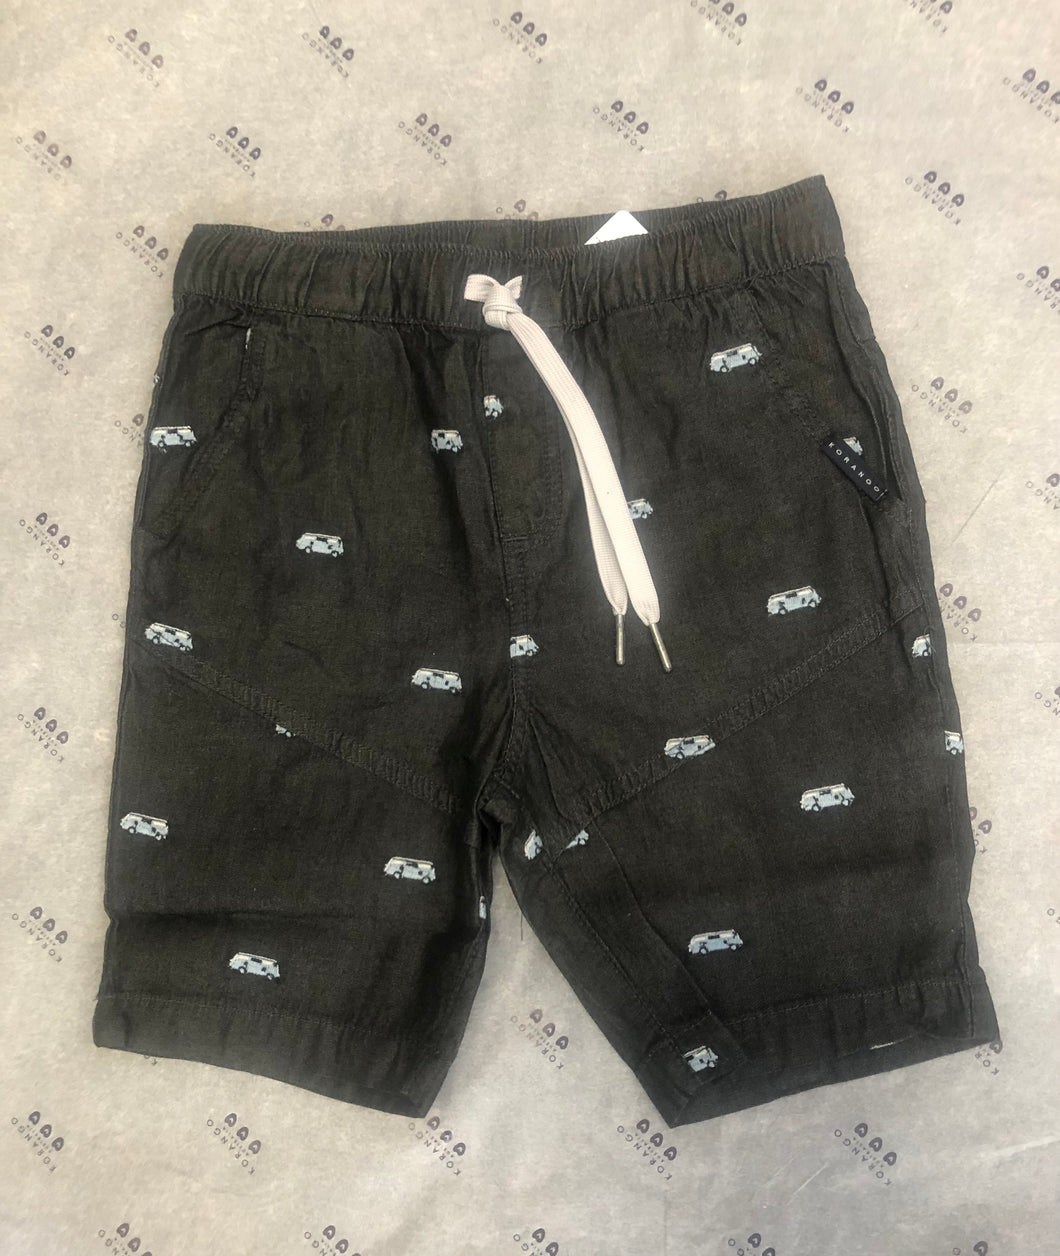 Korango Kombi Van Embroidered Shorts - Charcoal or Euro